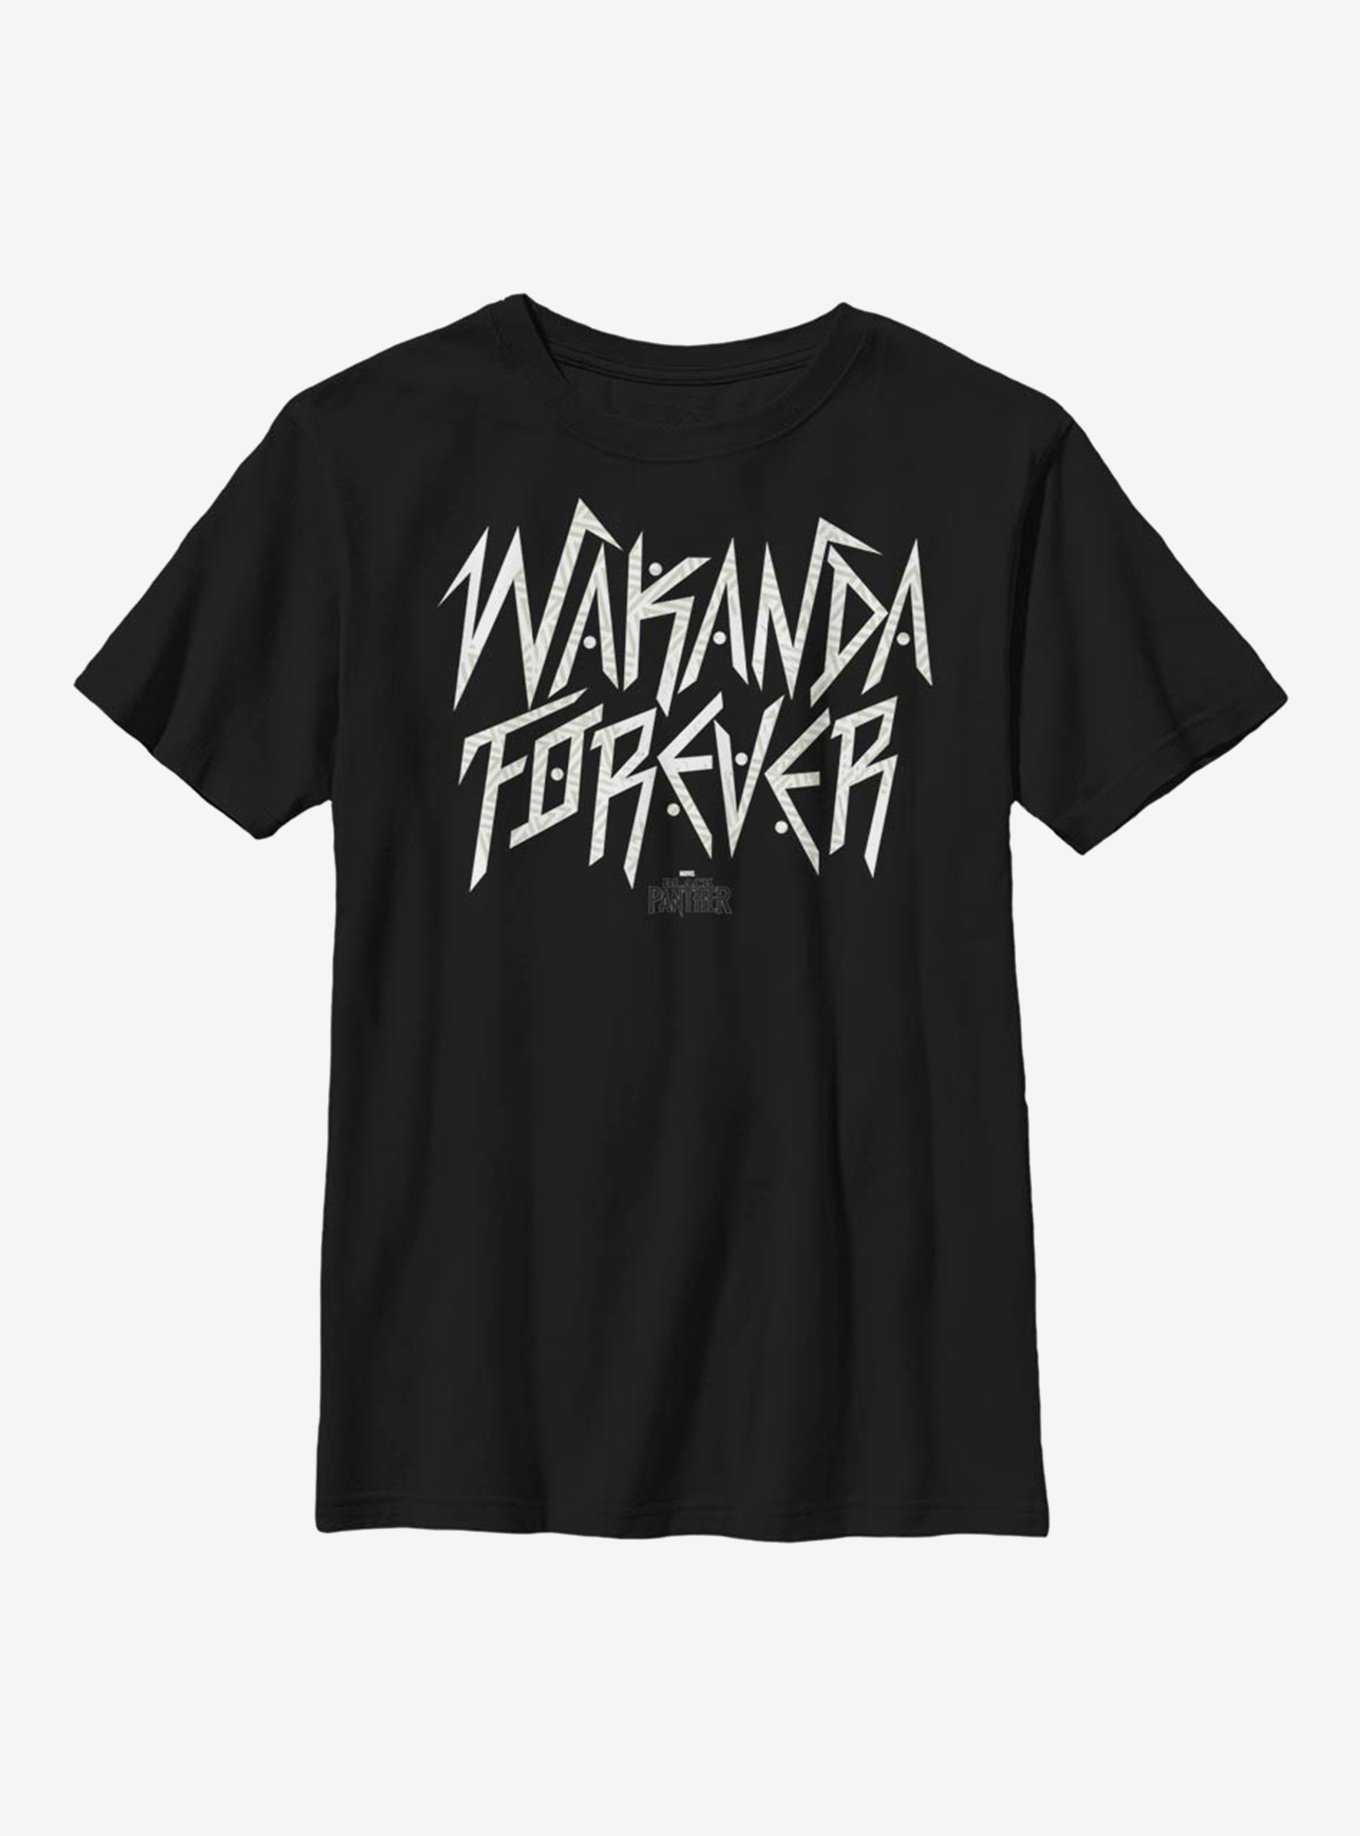 Marvel Black Panther Wakanda Forever Youth T-Shirt, , hi-res